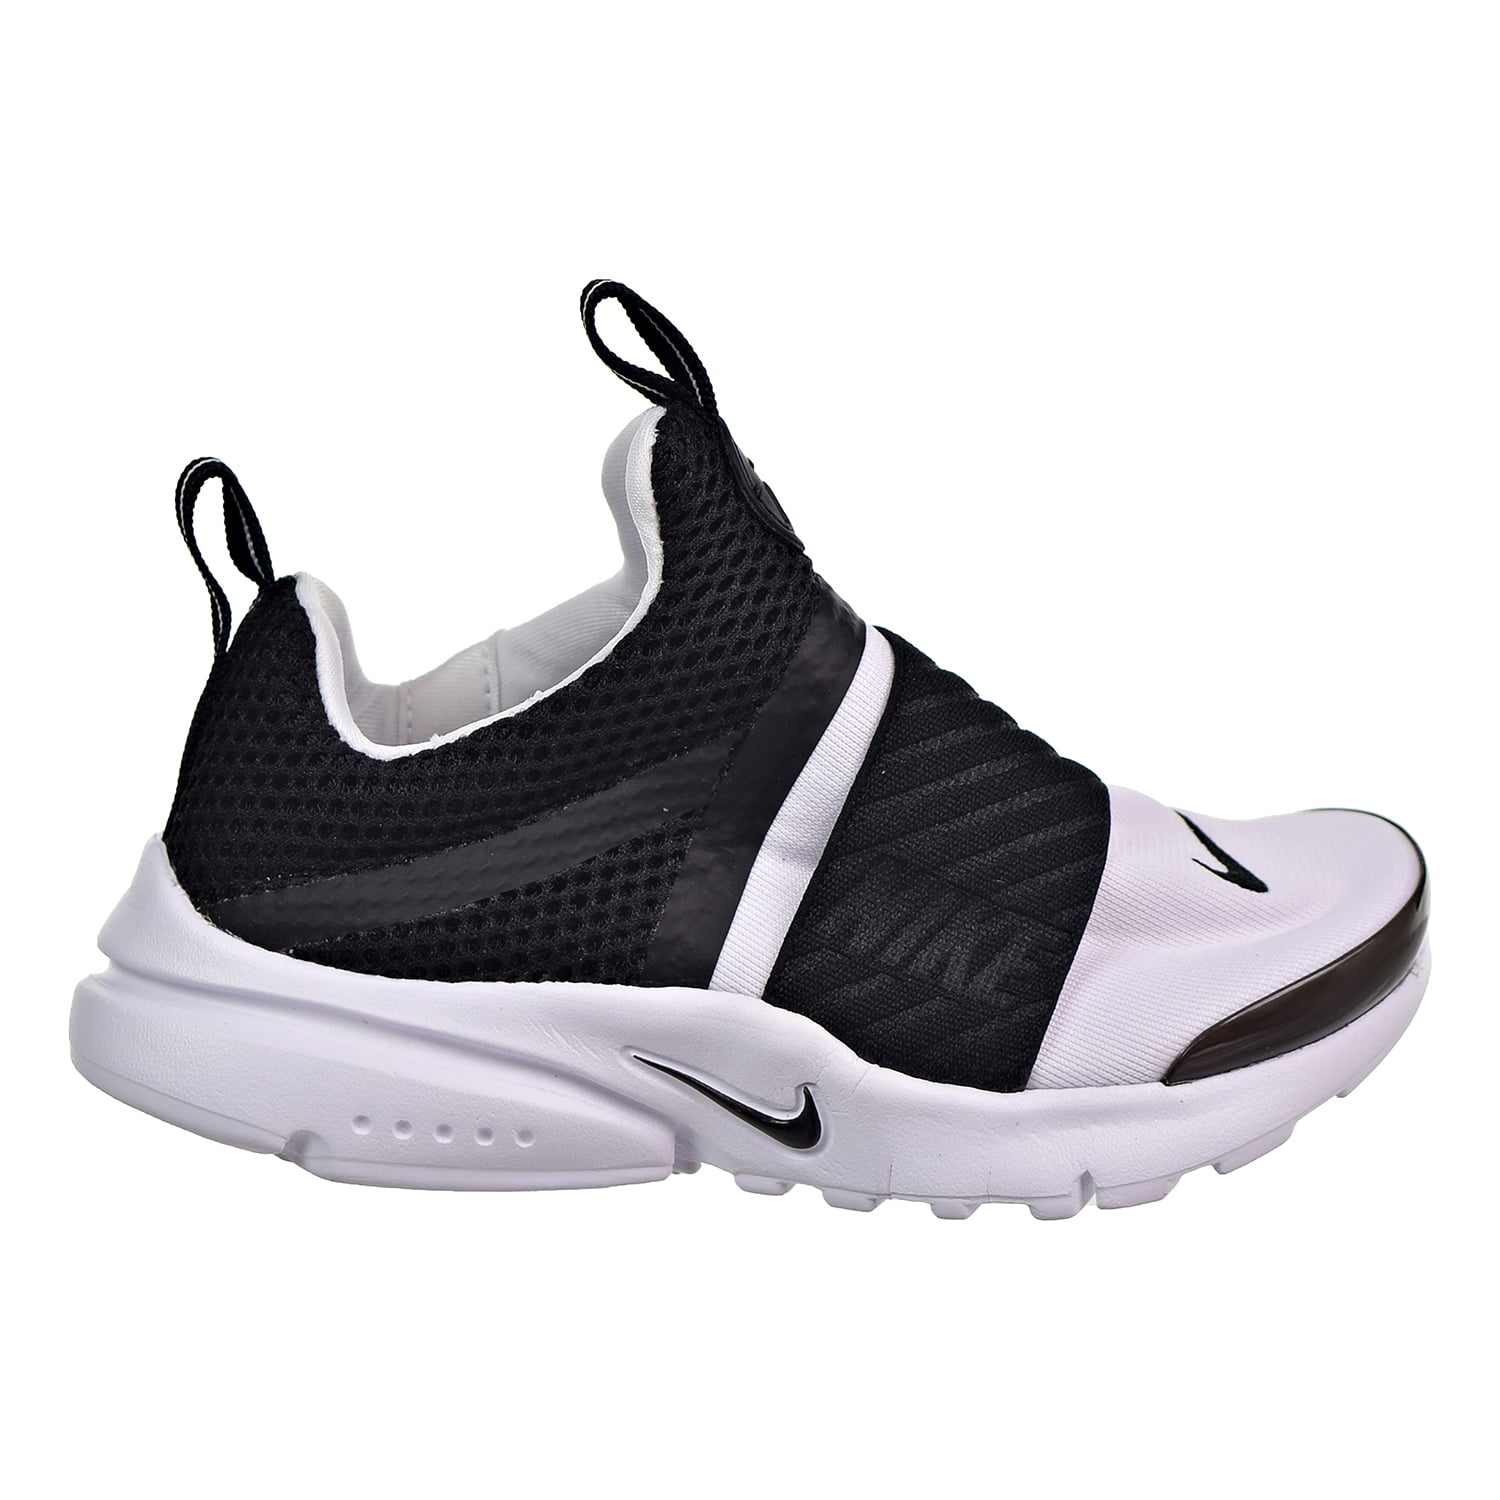 Nike Presto (PS) Pre School Boys Fashion Sneakers White/Black 870023-100 - Walmart.com